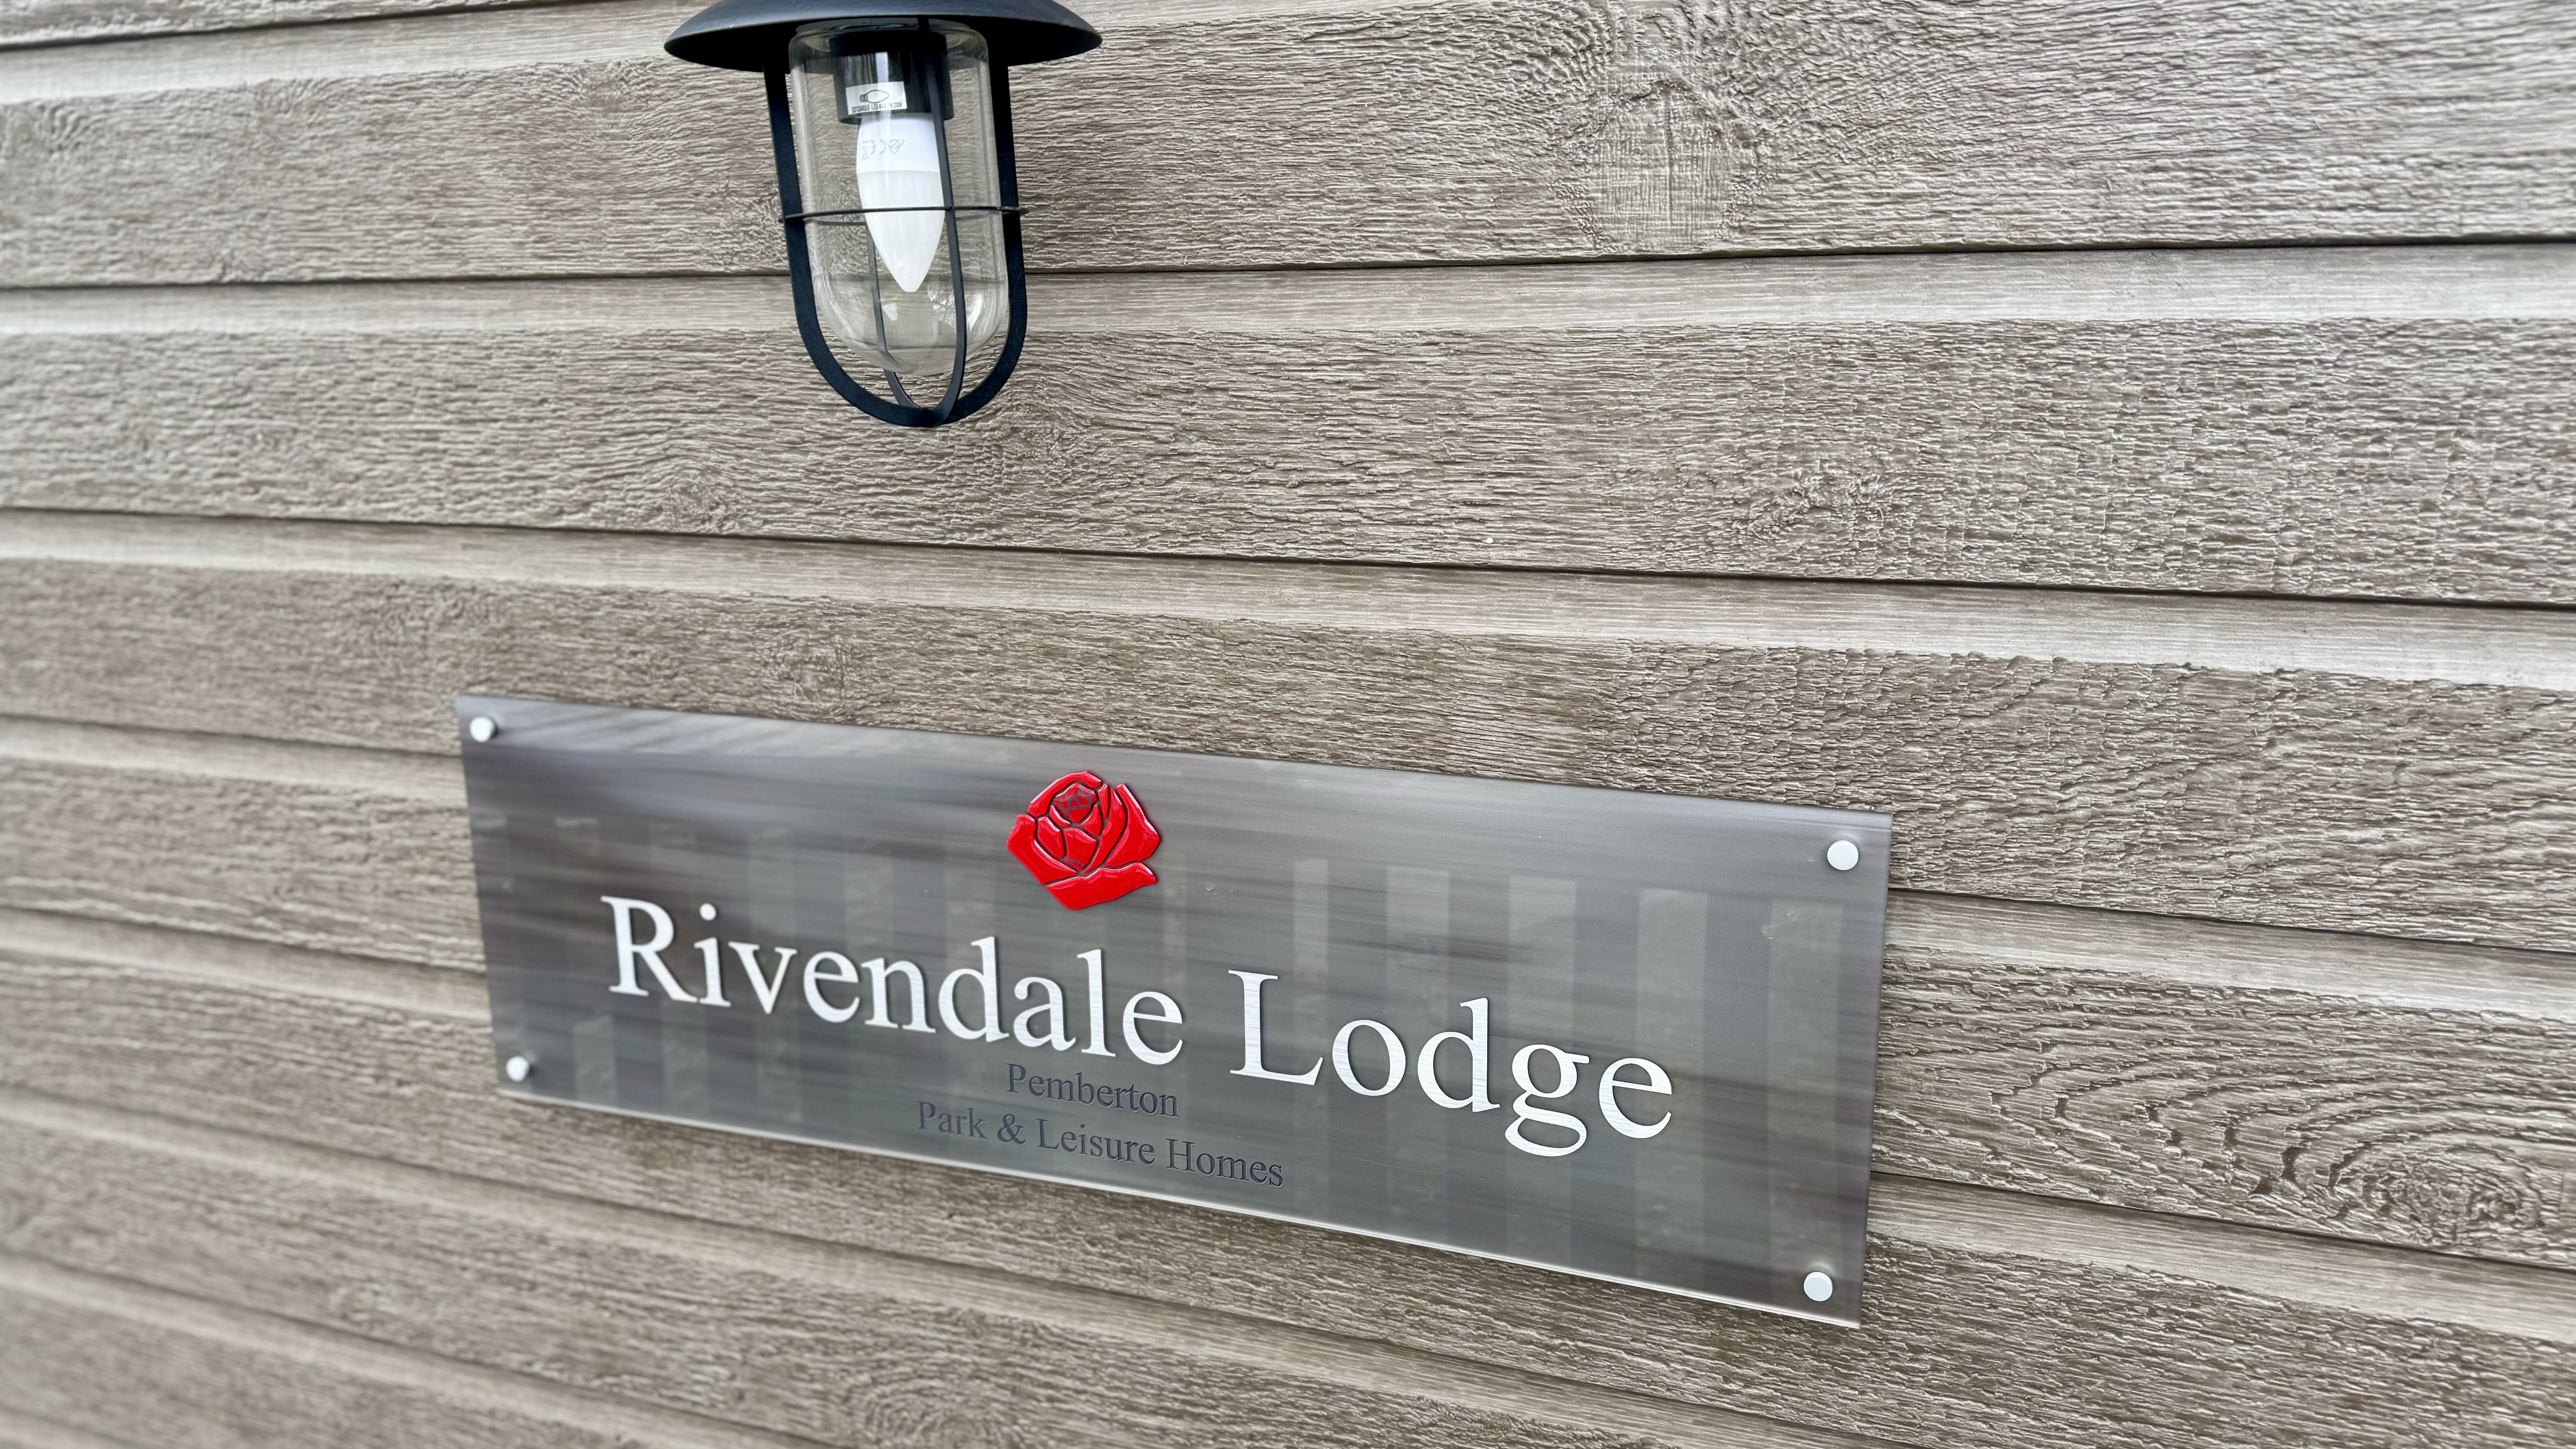 Rivendale Lodge